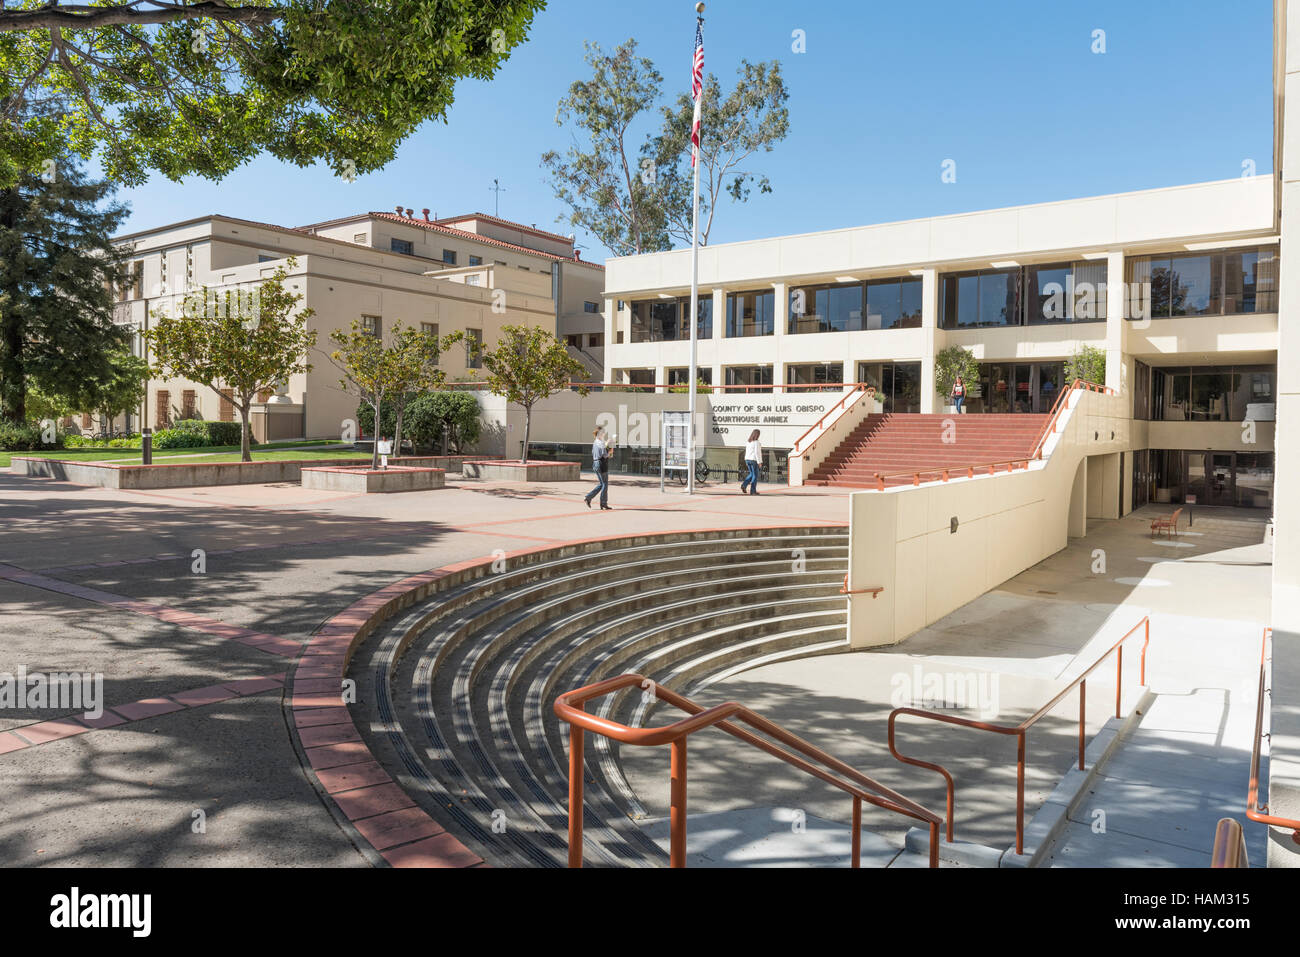 The Superior County Court Building at San Luis Obispo, California, USA Stock Photo